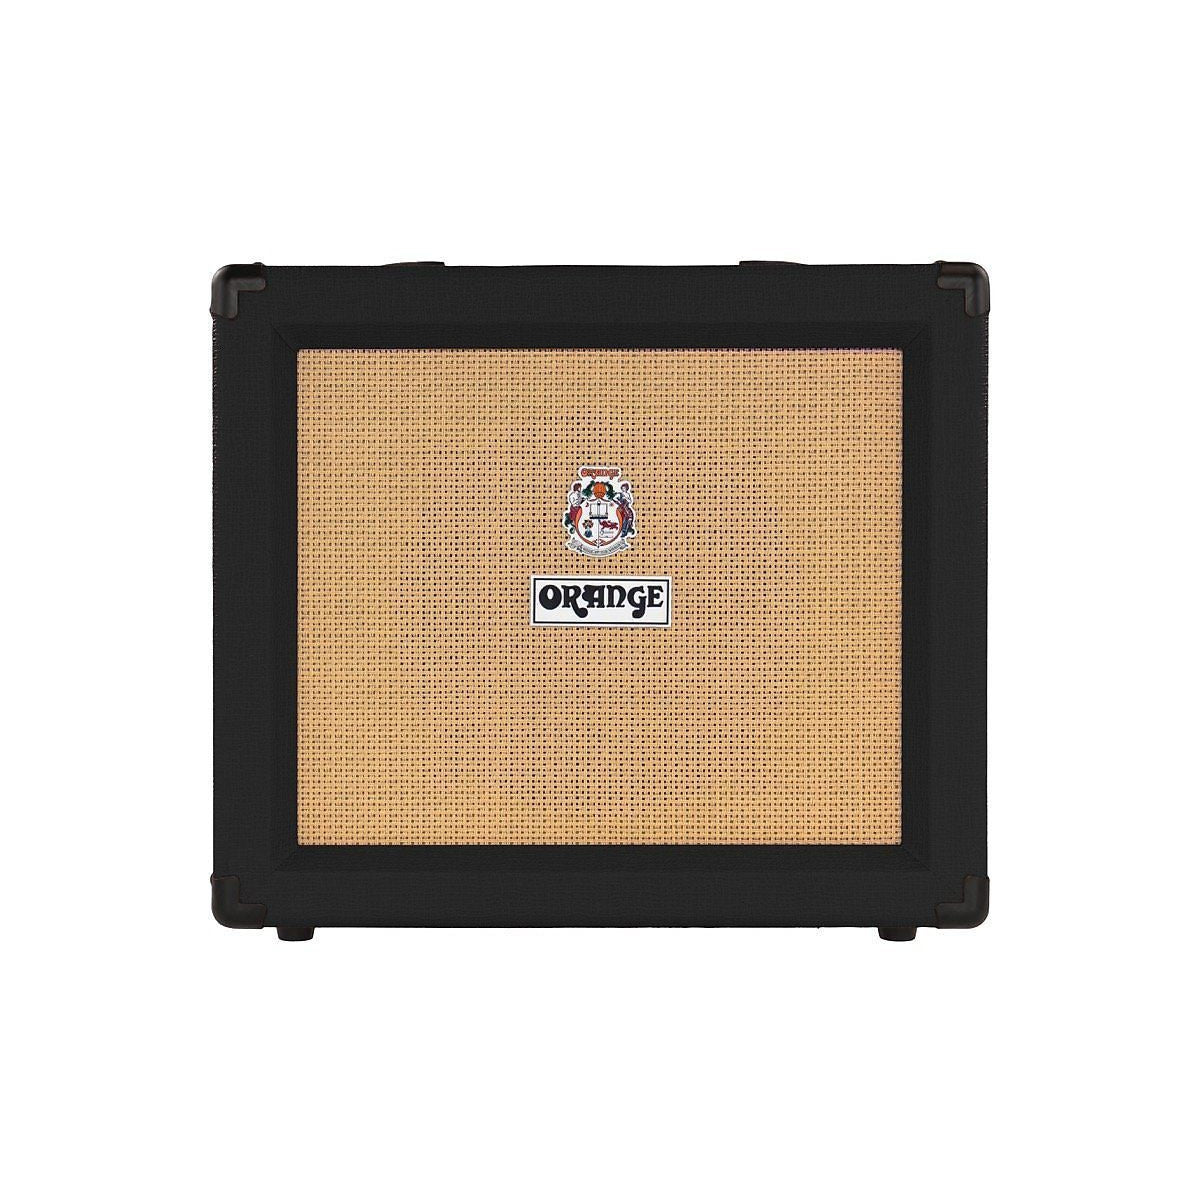 Orange Crush 35RT Guitar Combo Amplifier with Reverb, Black